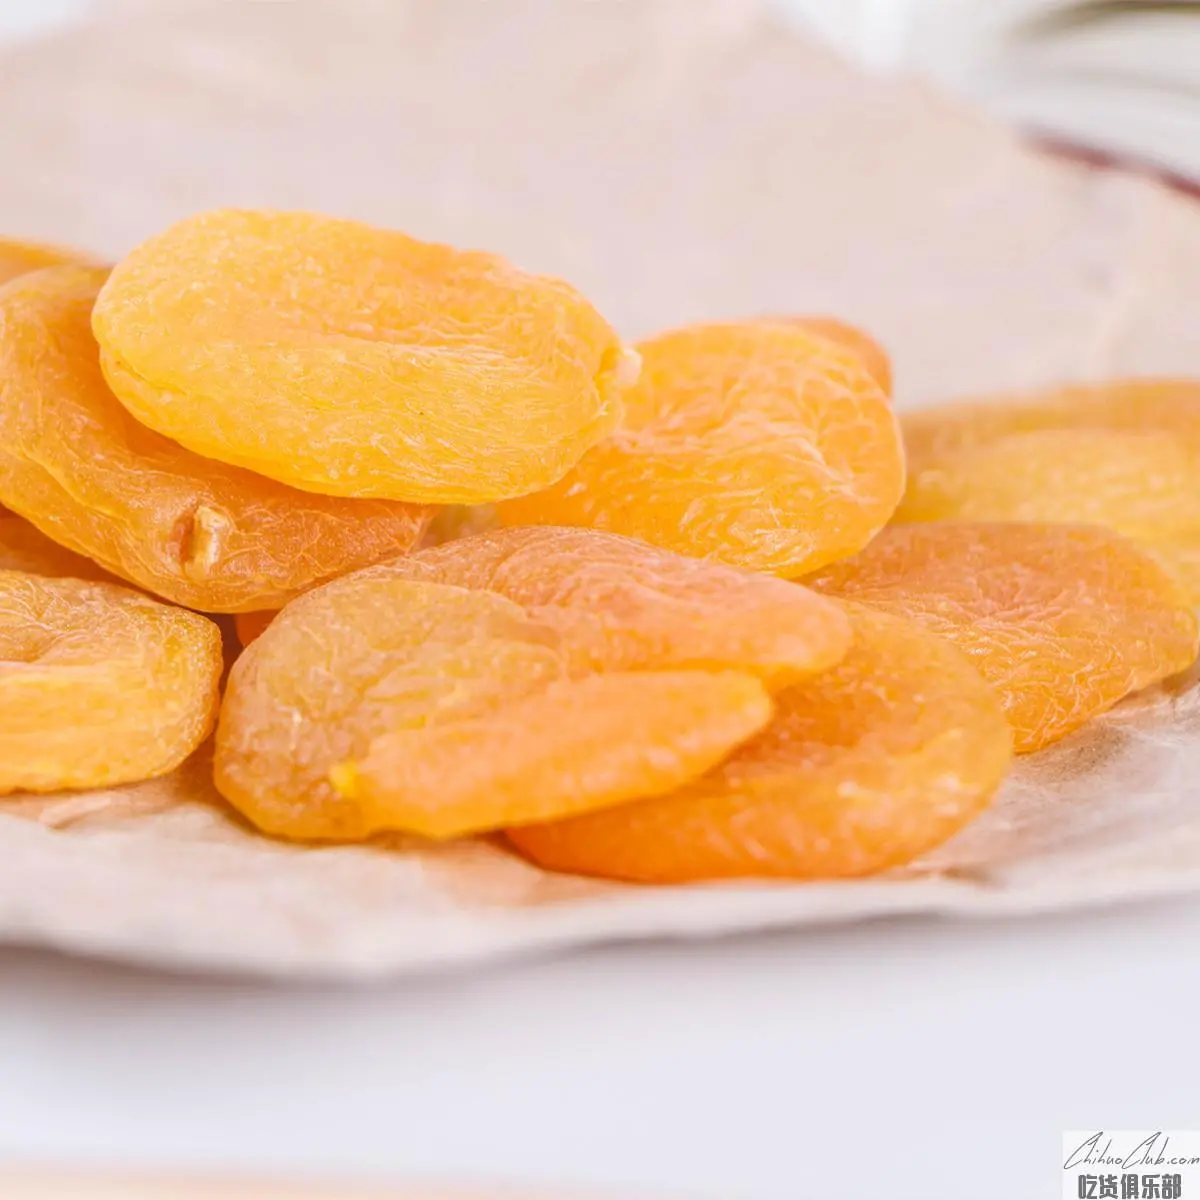 Ingeshas dried apricot